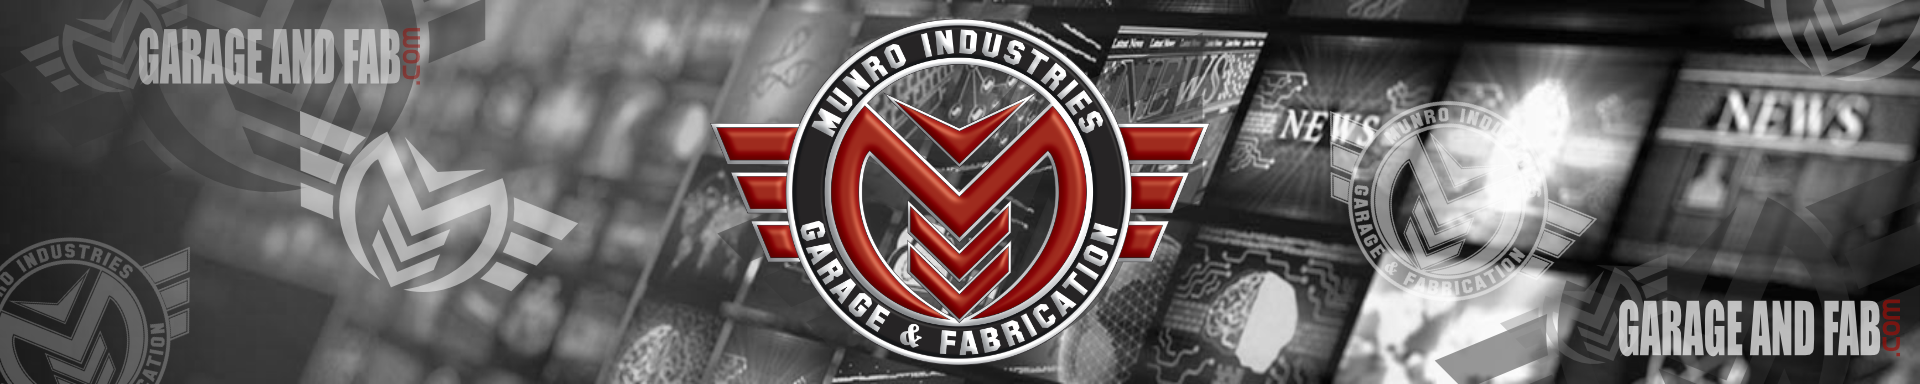 News & Headlines | GarageAndFab.com | Munro Industries gf-1001010102